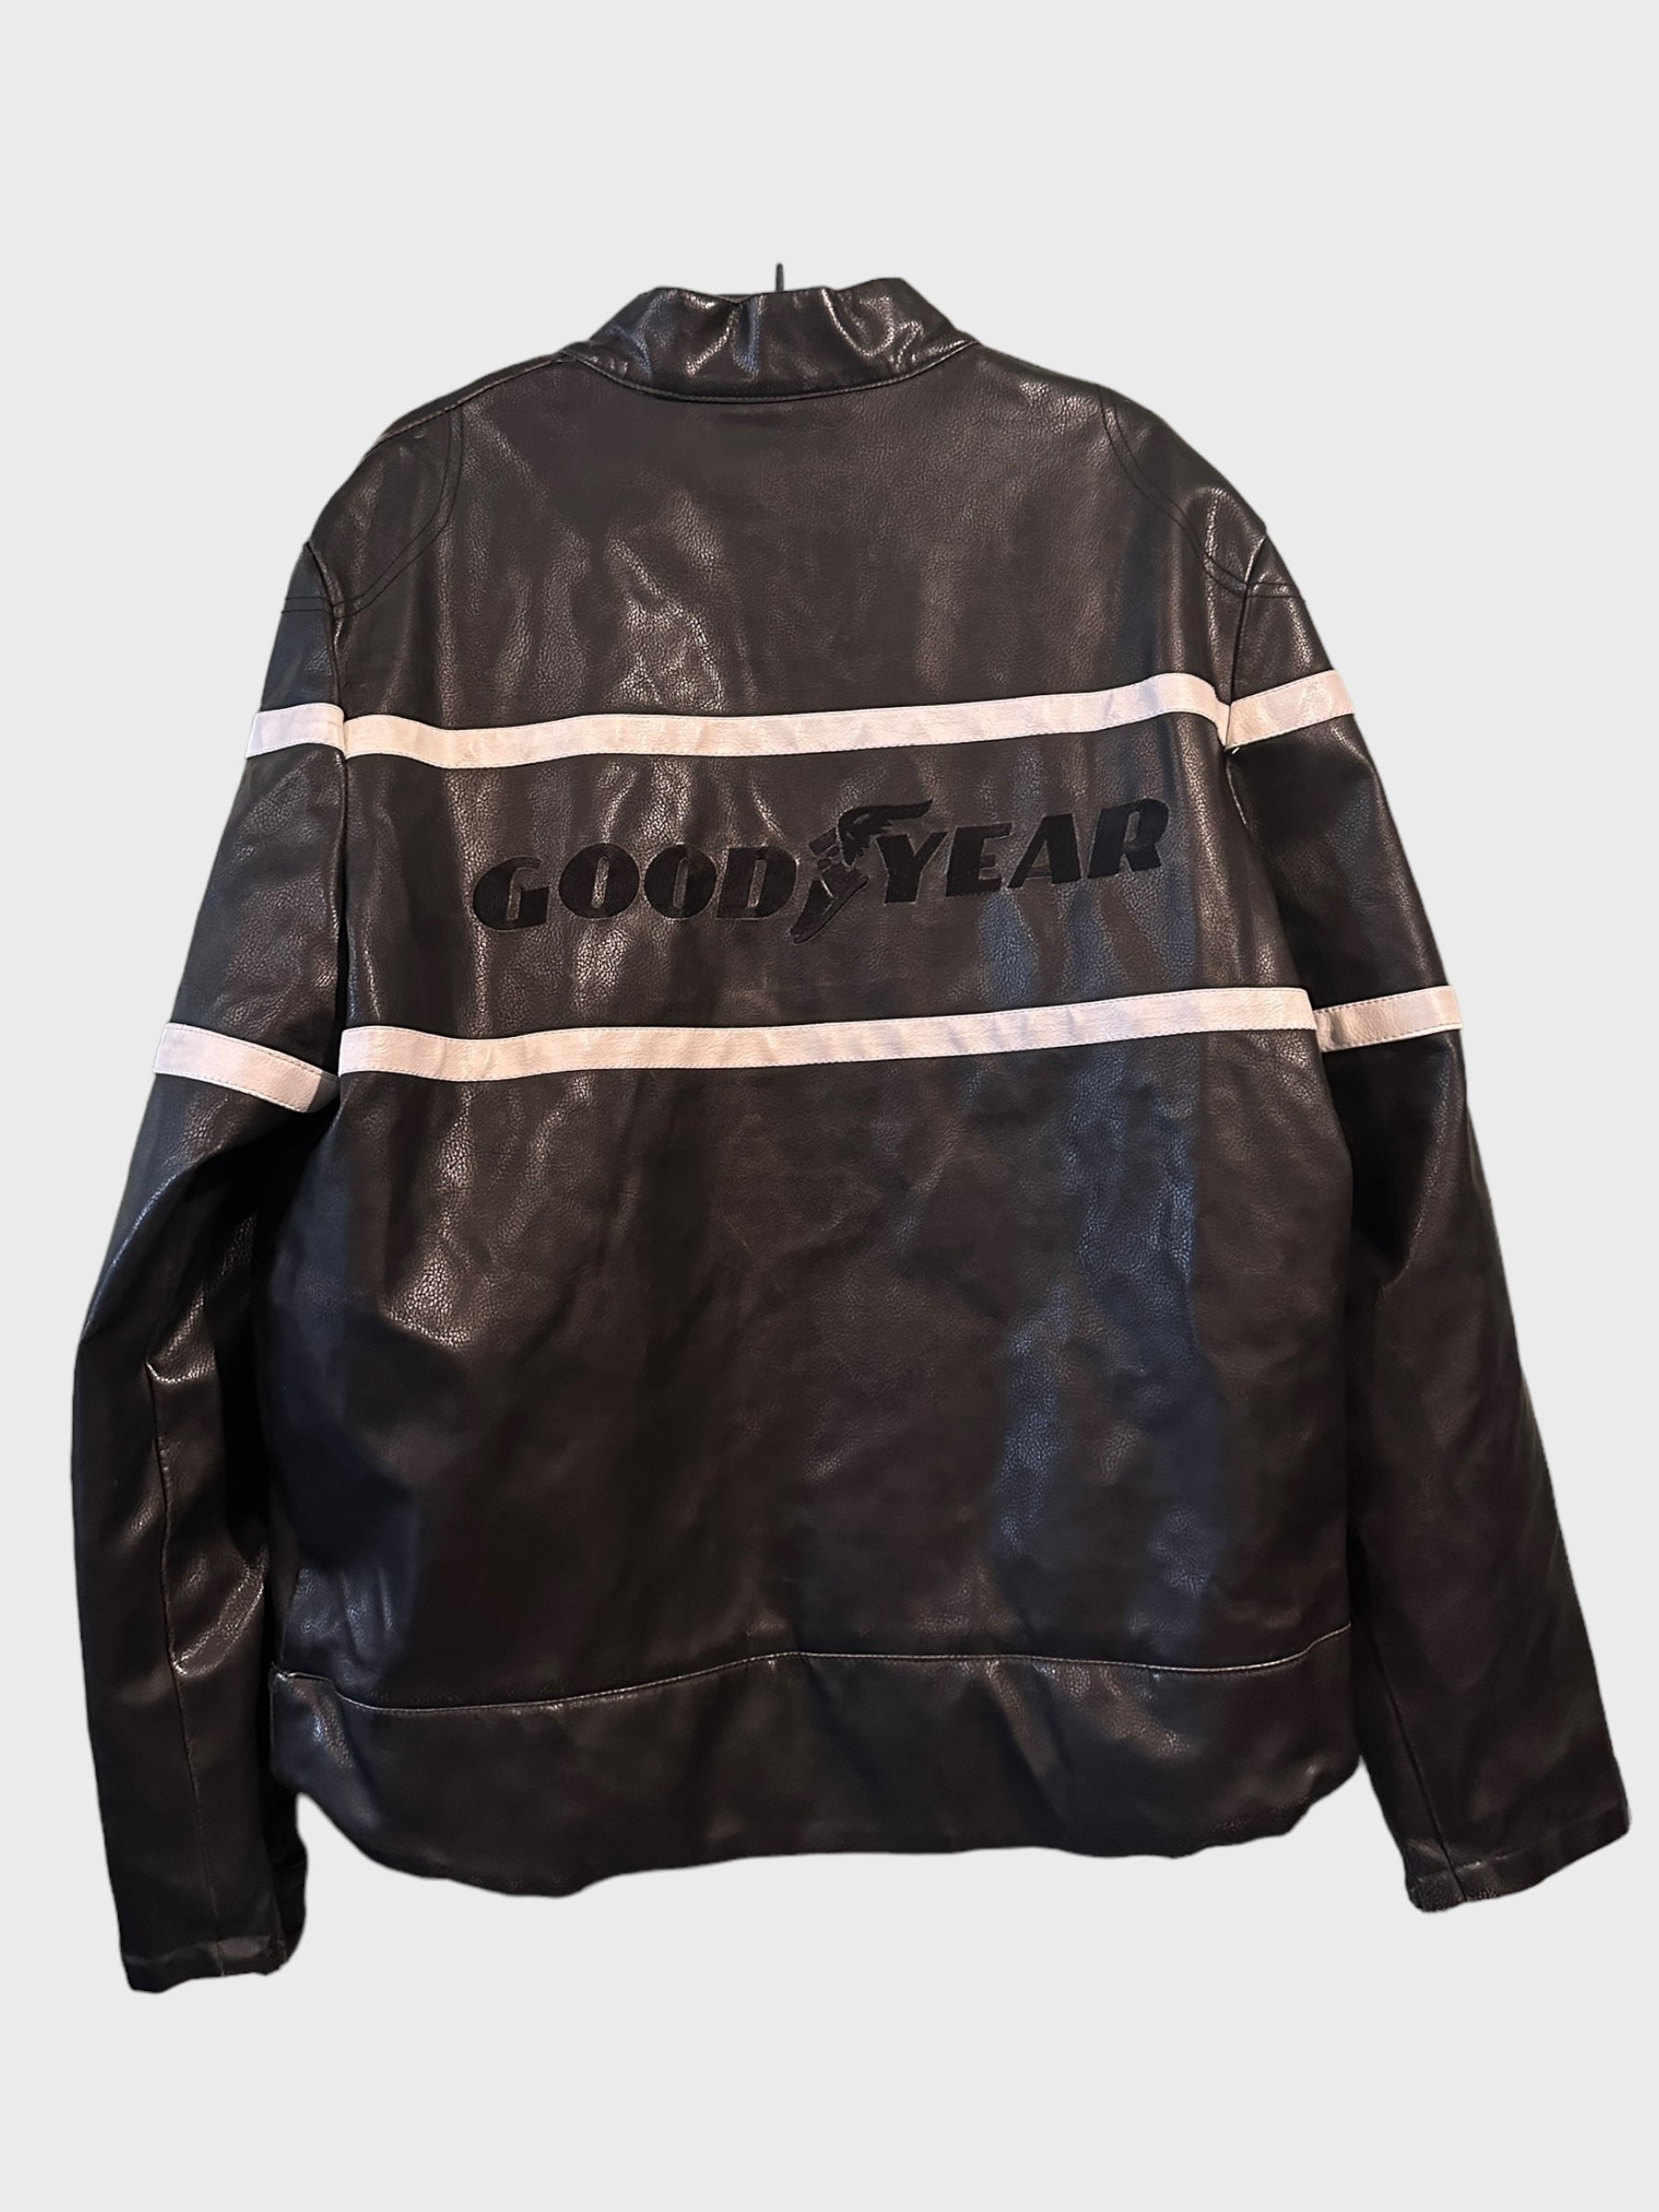 Racer Leather Jacket